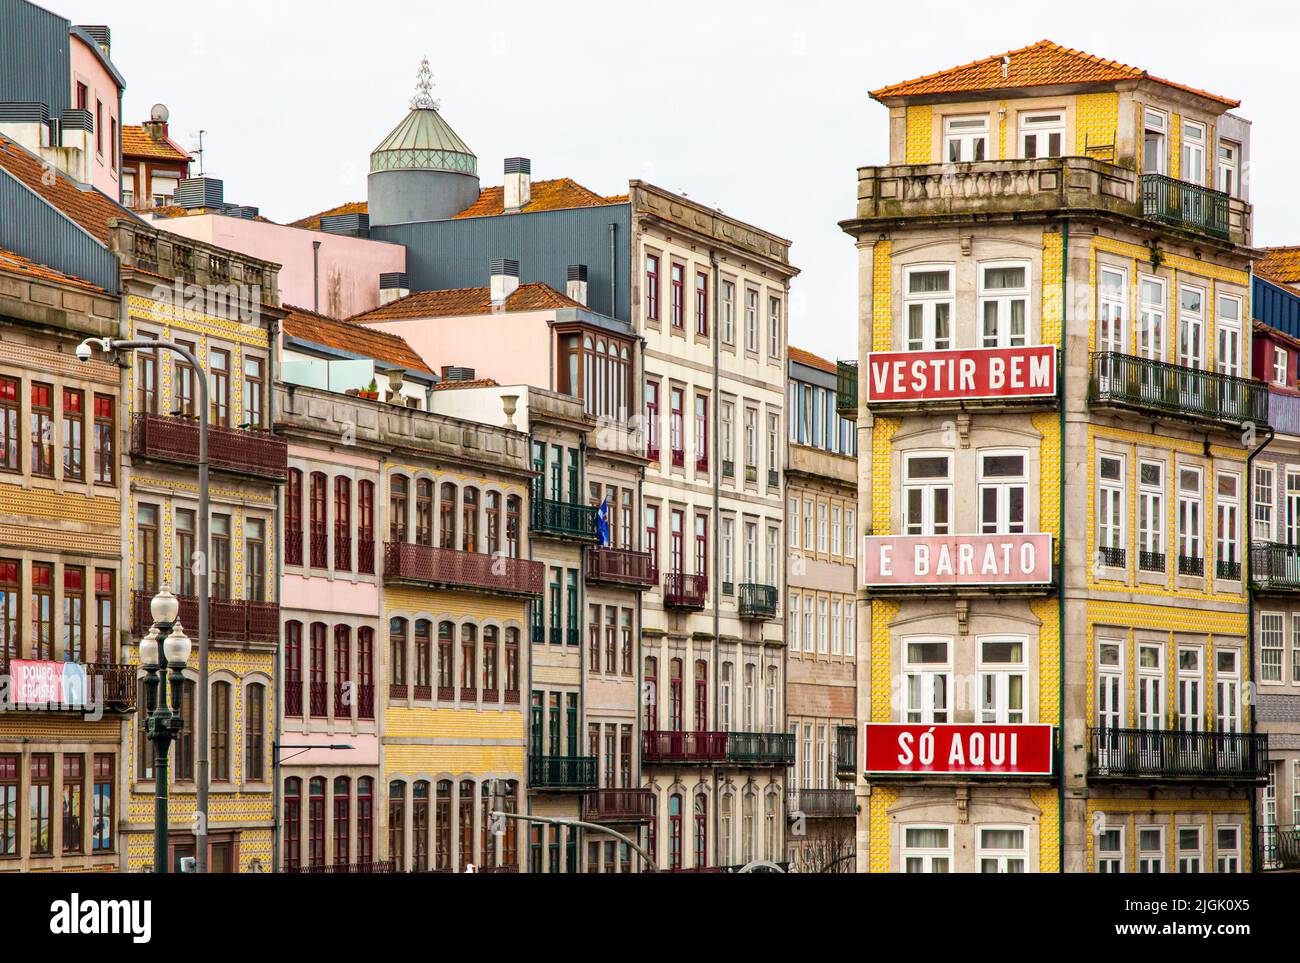 Typical buildings near Estacao de Sao Bento railway station in the centre of Porto a major city in Northern Portiugal. Stock Photo